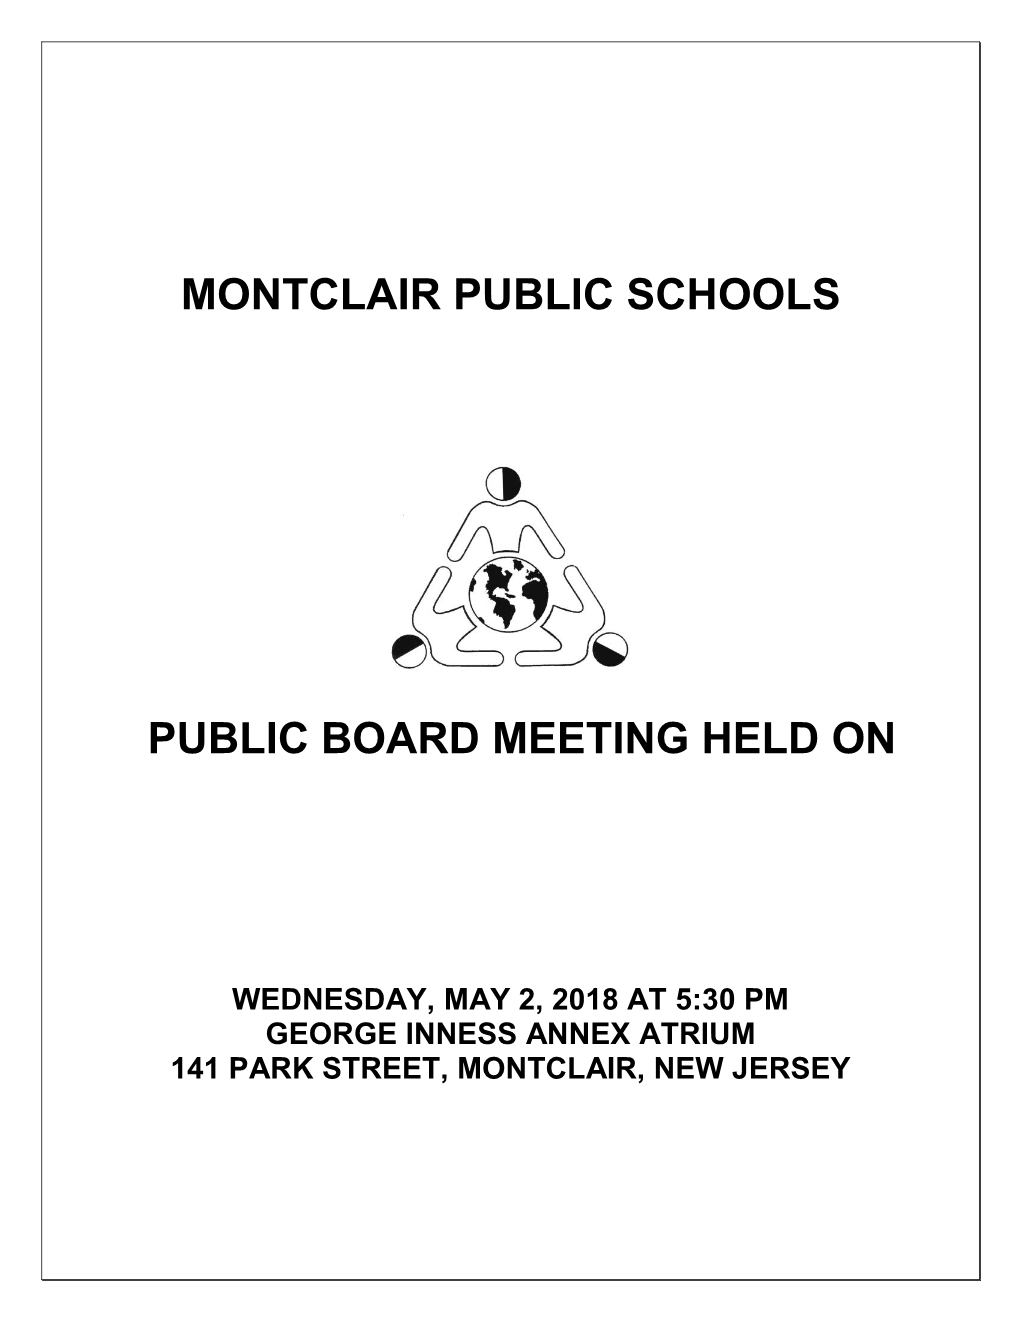 Montclair Public Schools Public Board Meeting Held On